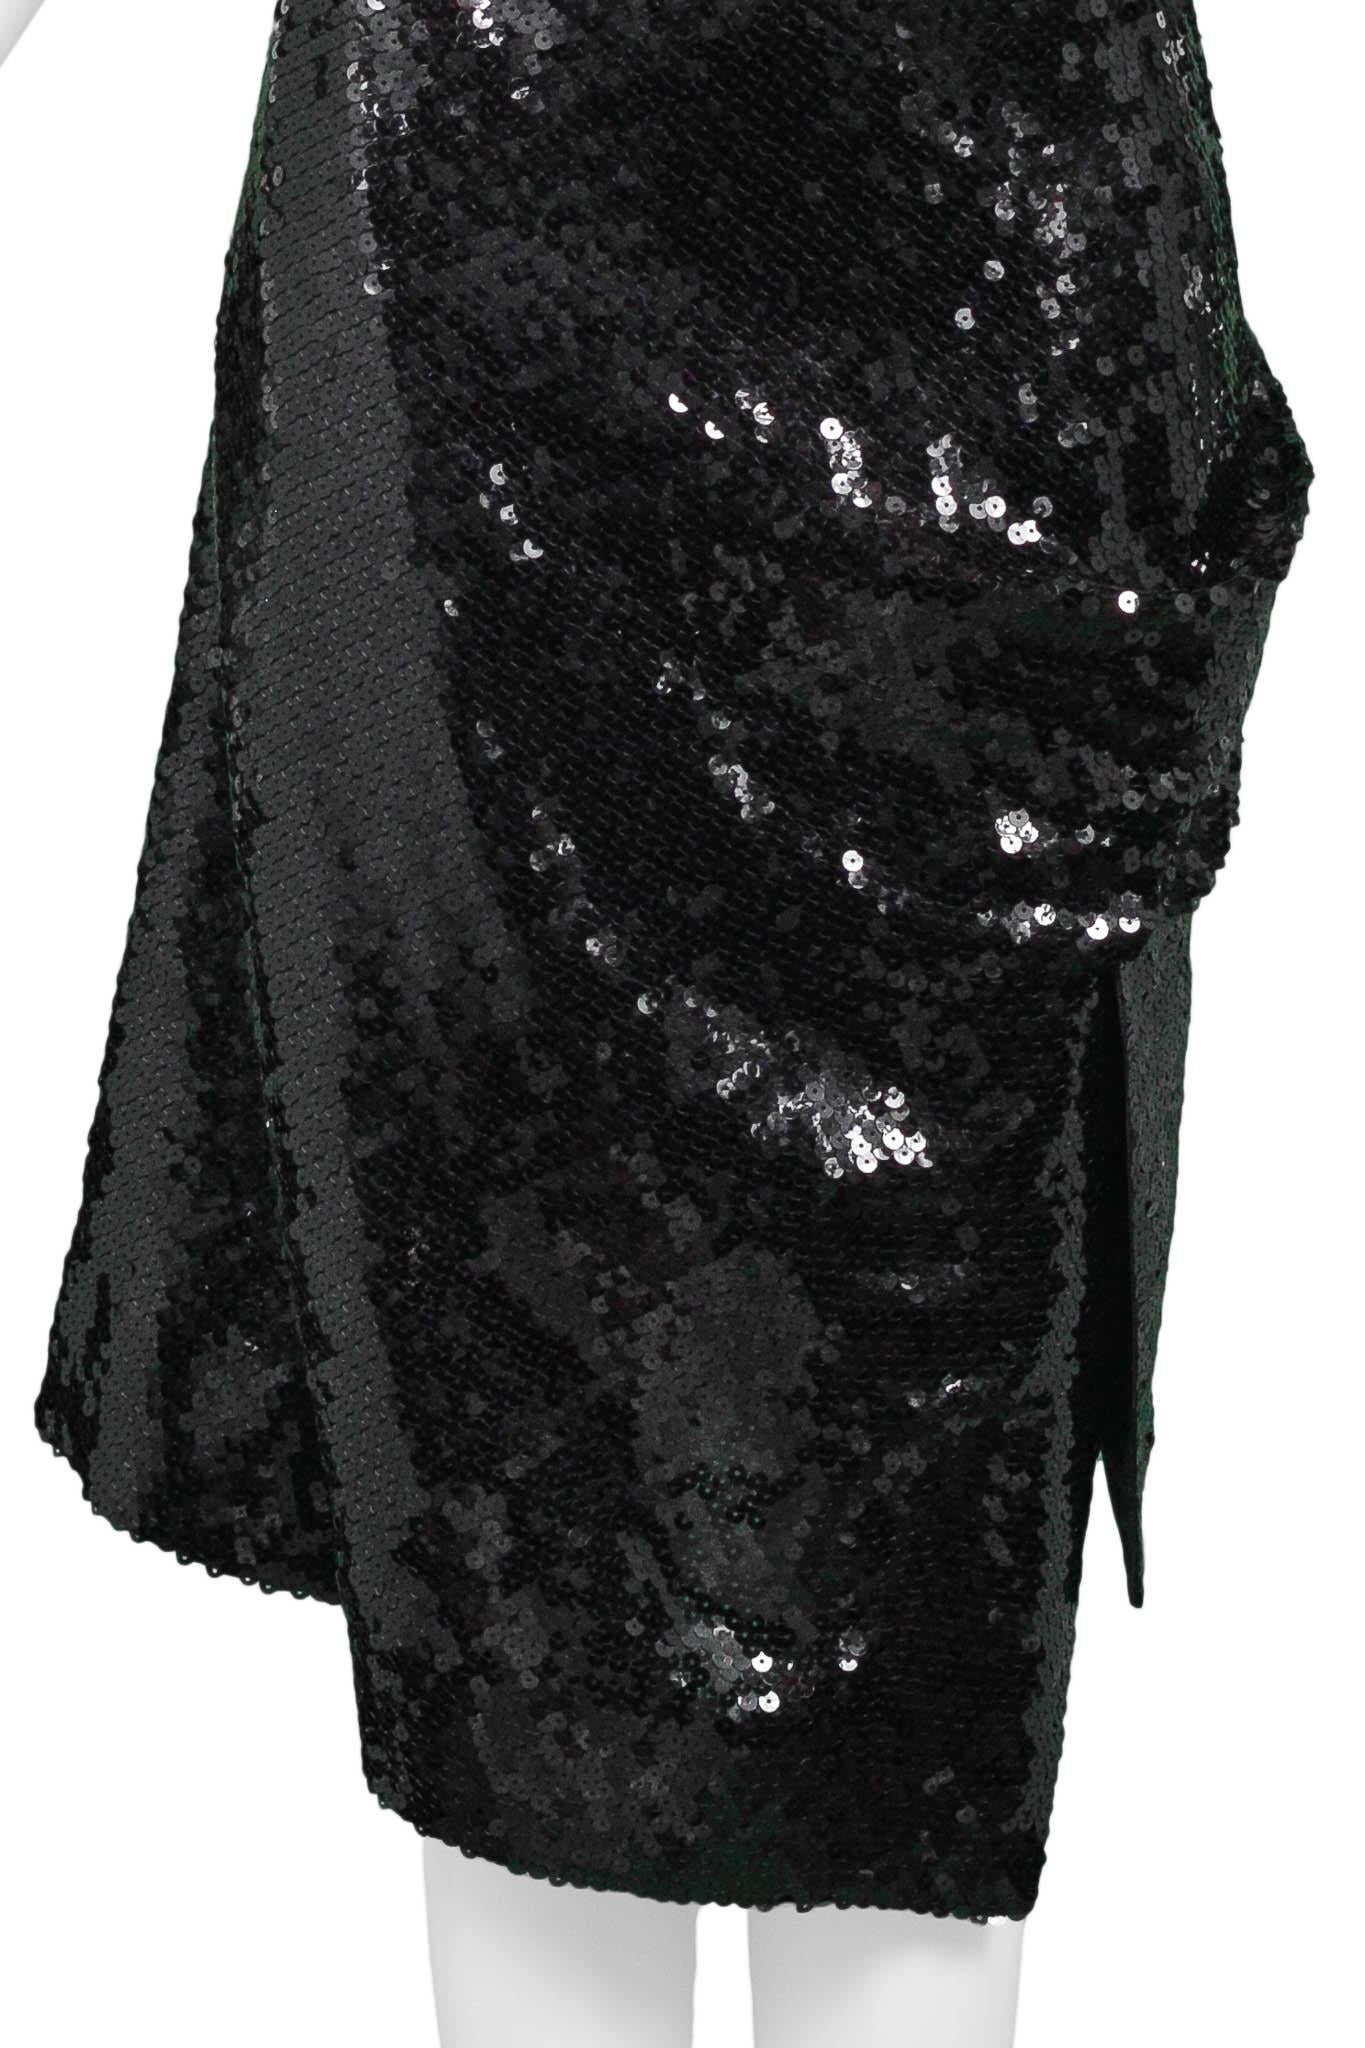 Vivienne Westwood Couture Black Sequin Strapless Dress 1